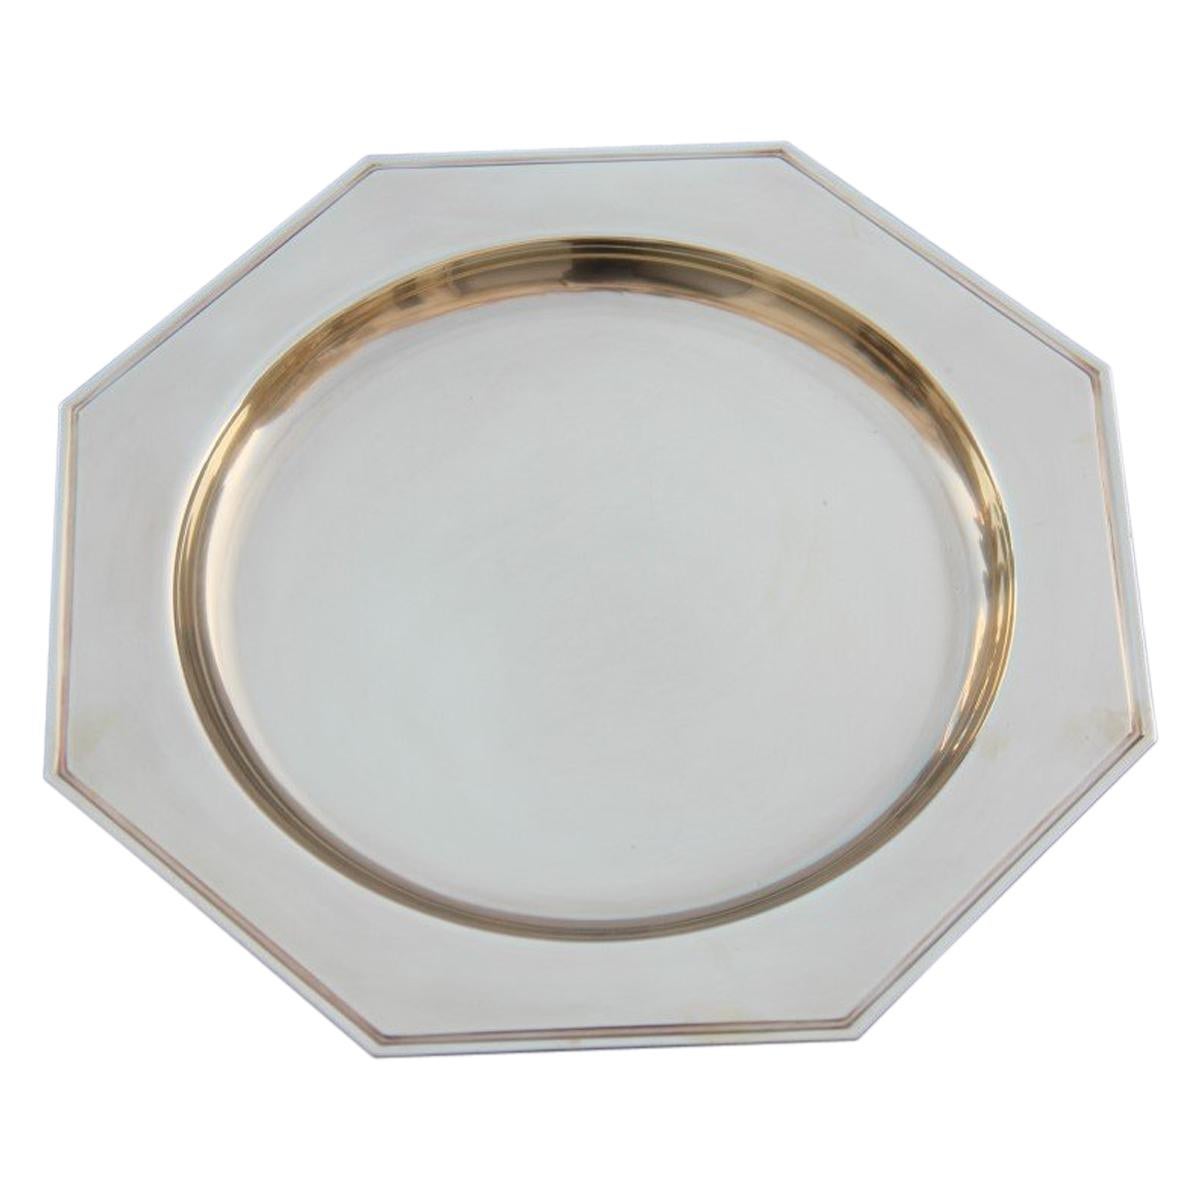 Hexagonal Plate in Solid Brass Gold Italian Design 1970 Tray